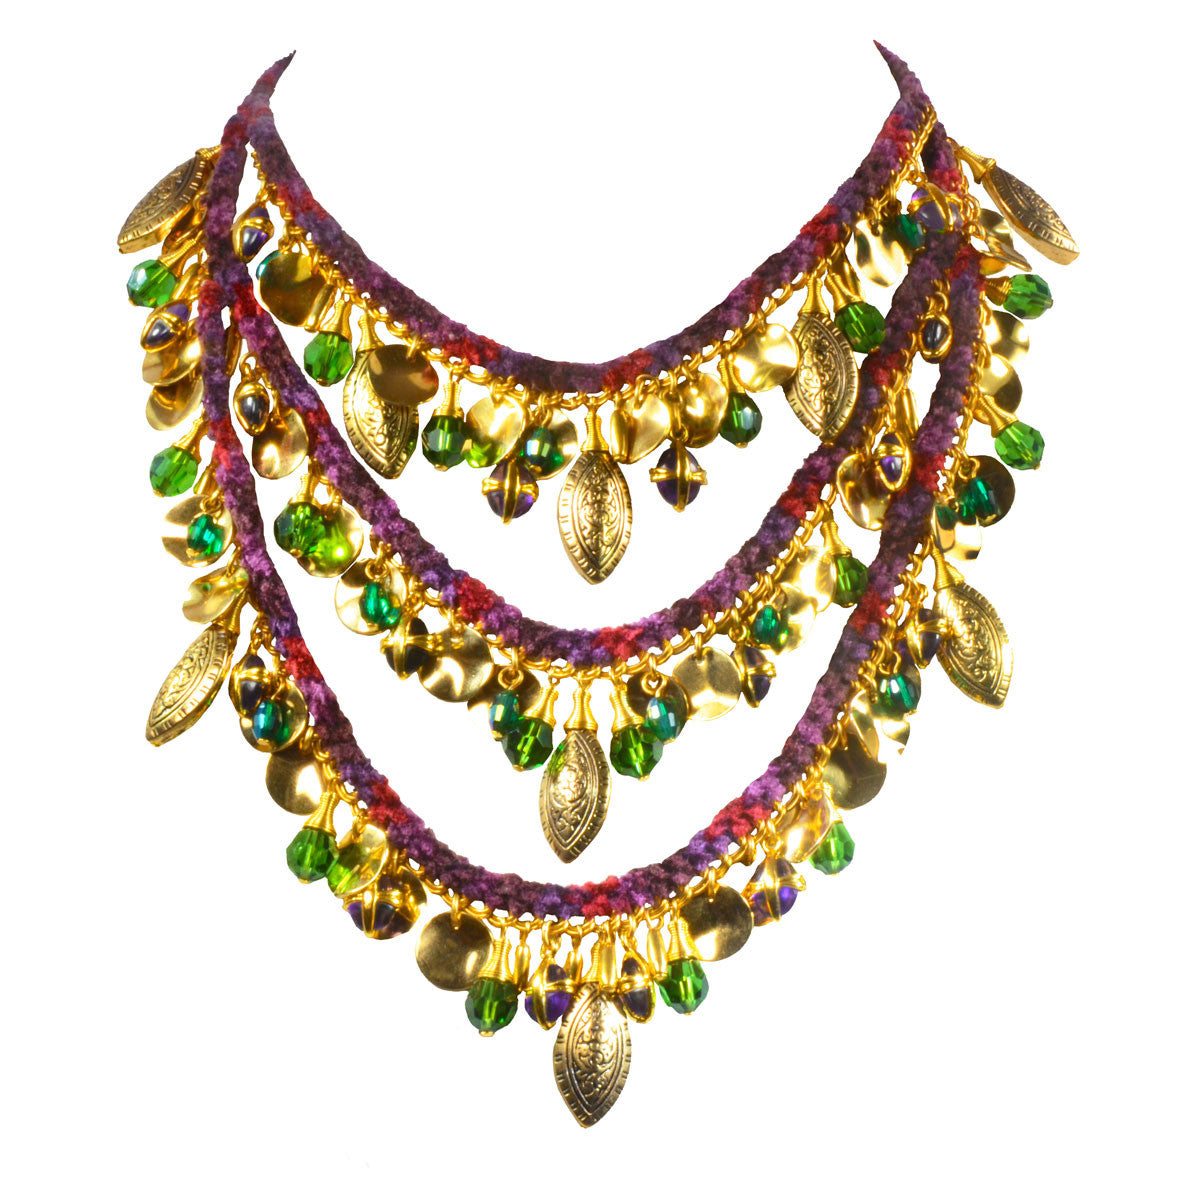 Asiis Necklace - Alzerina Jewelry